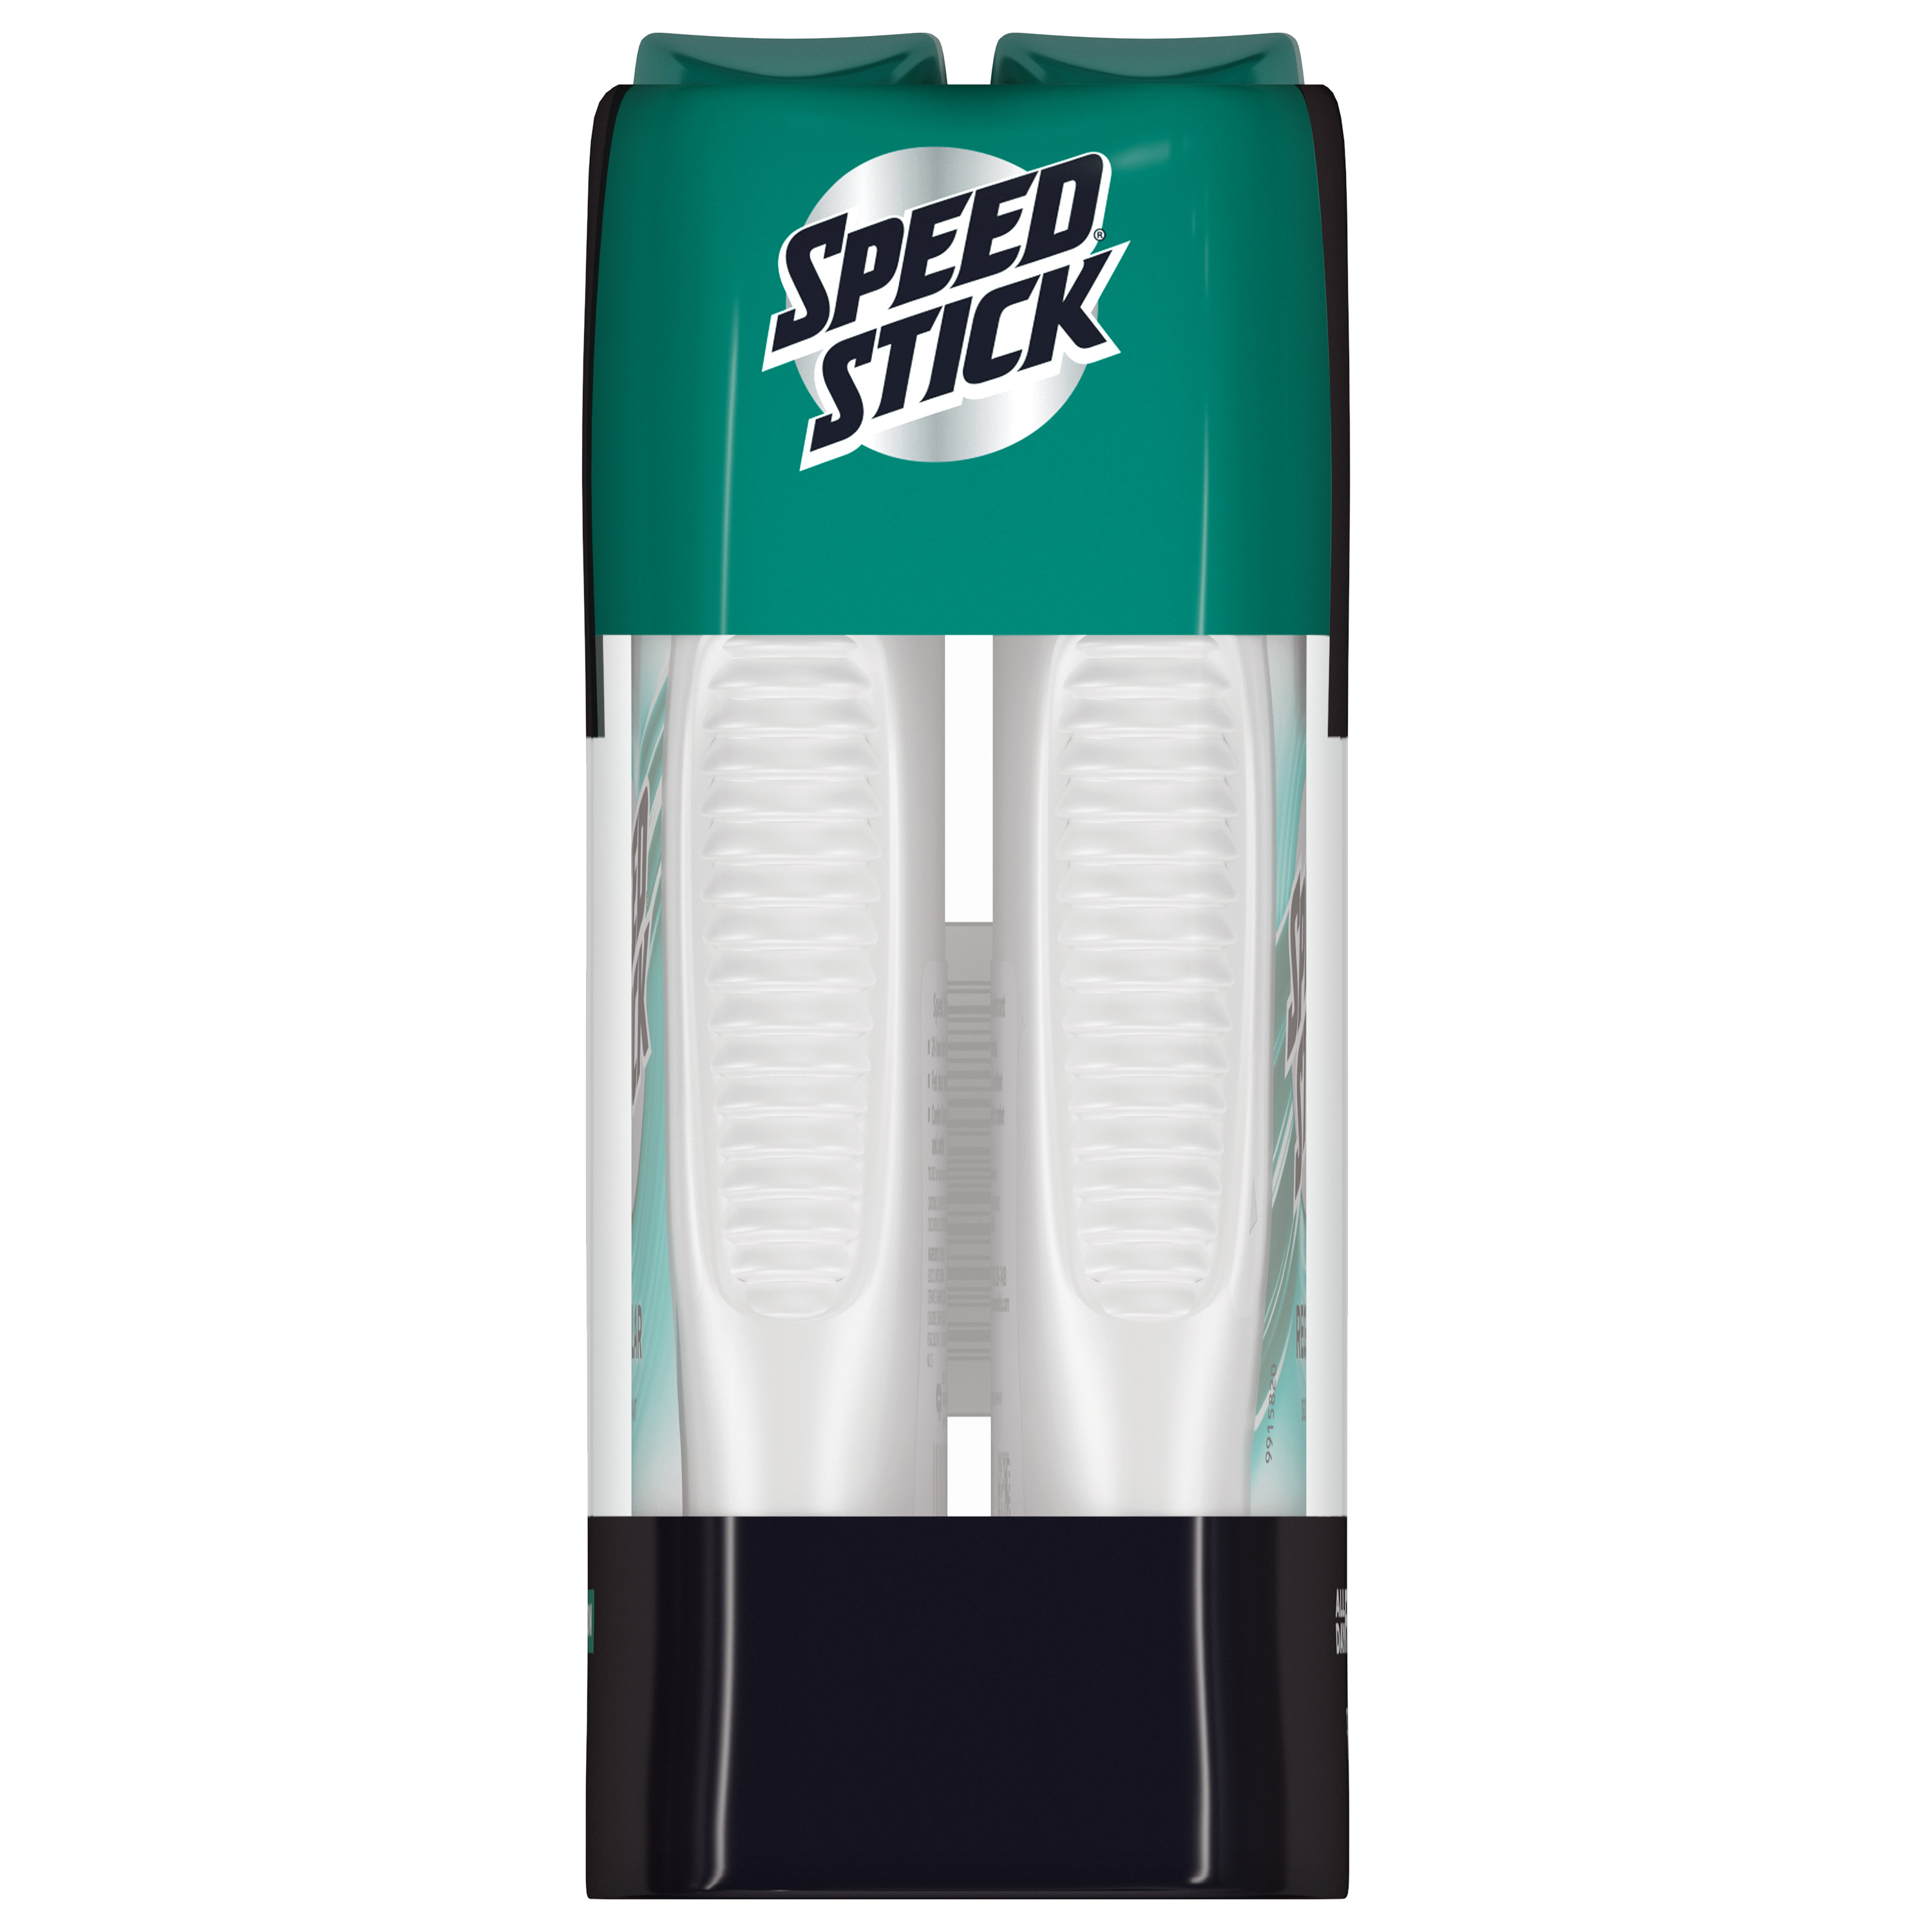 Speed Stick Deodorant for Men, Regular - 3 ounce (4 Pack) - image 17 of 17